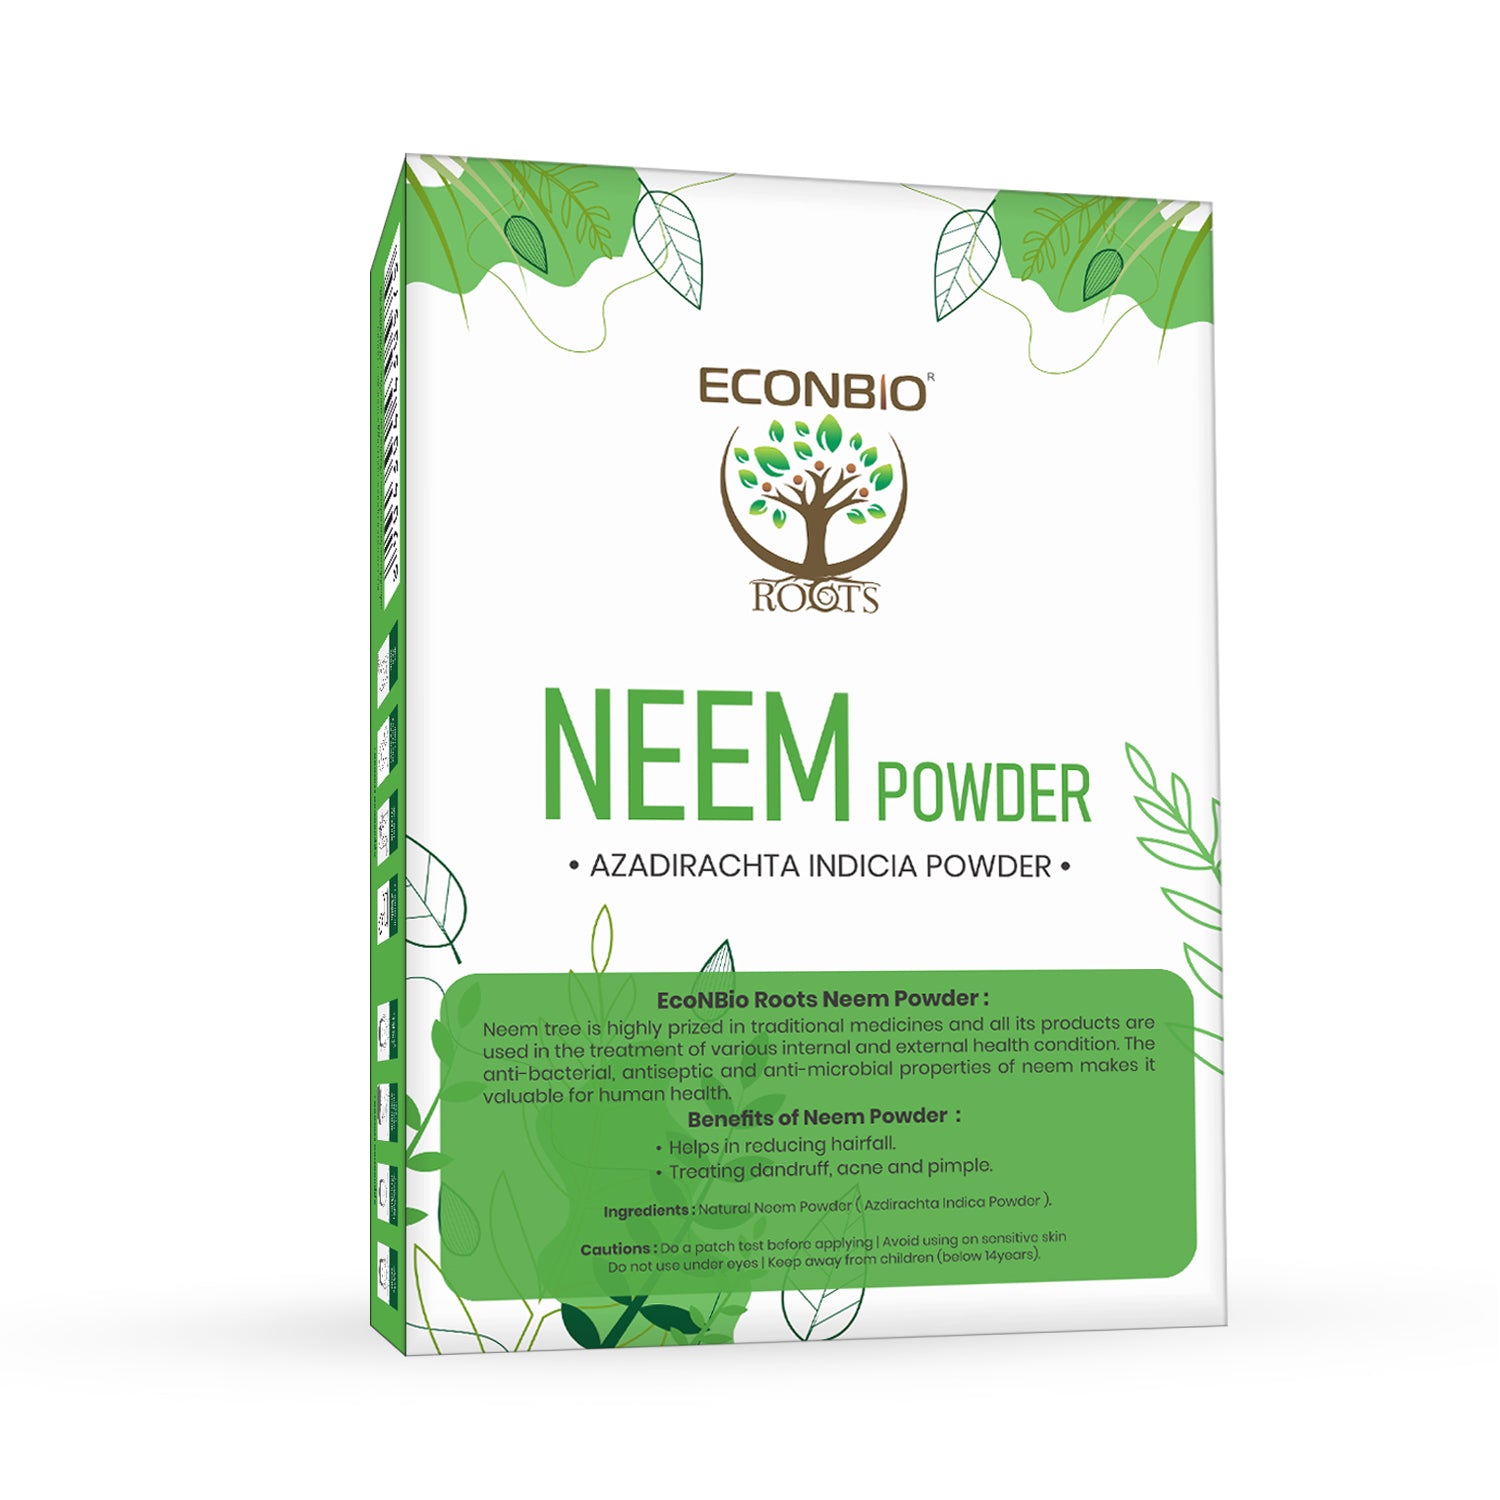 ECONBIO ROOTS Neem Powder 100g (Pack of 2)